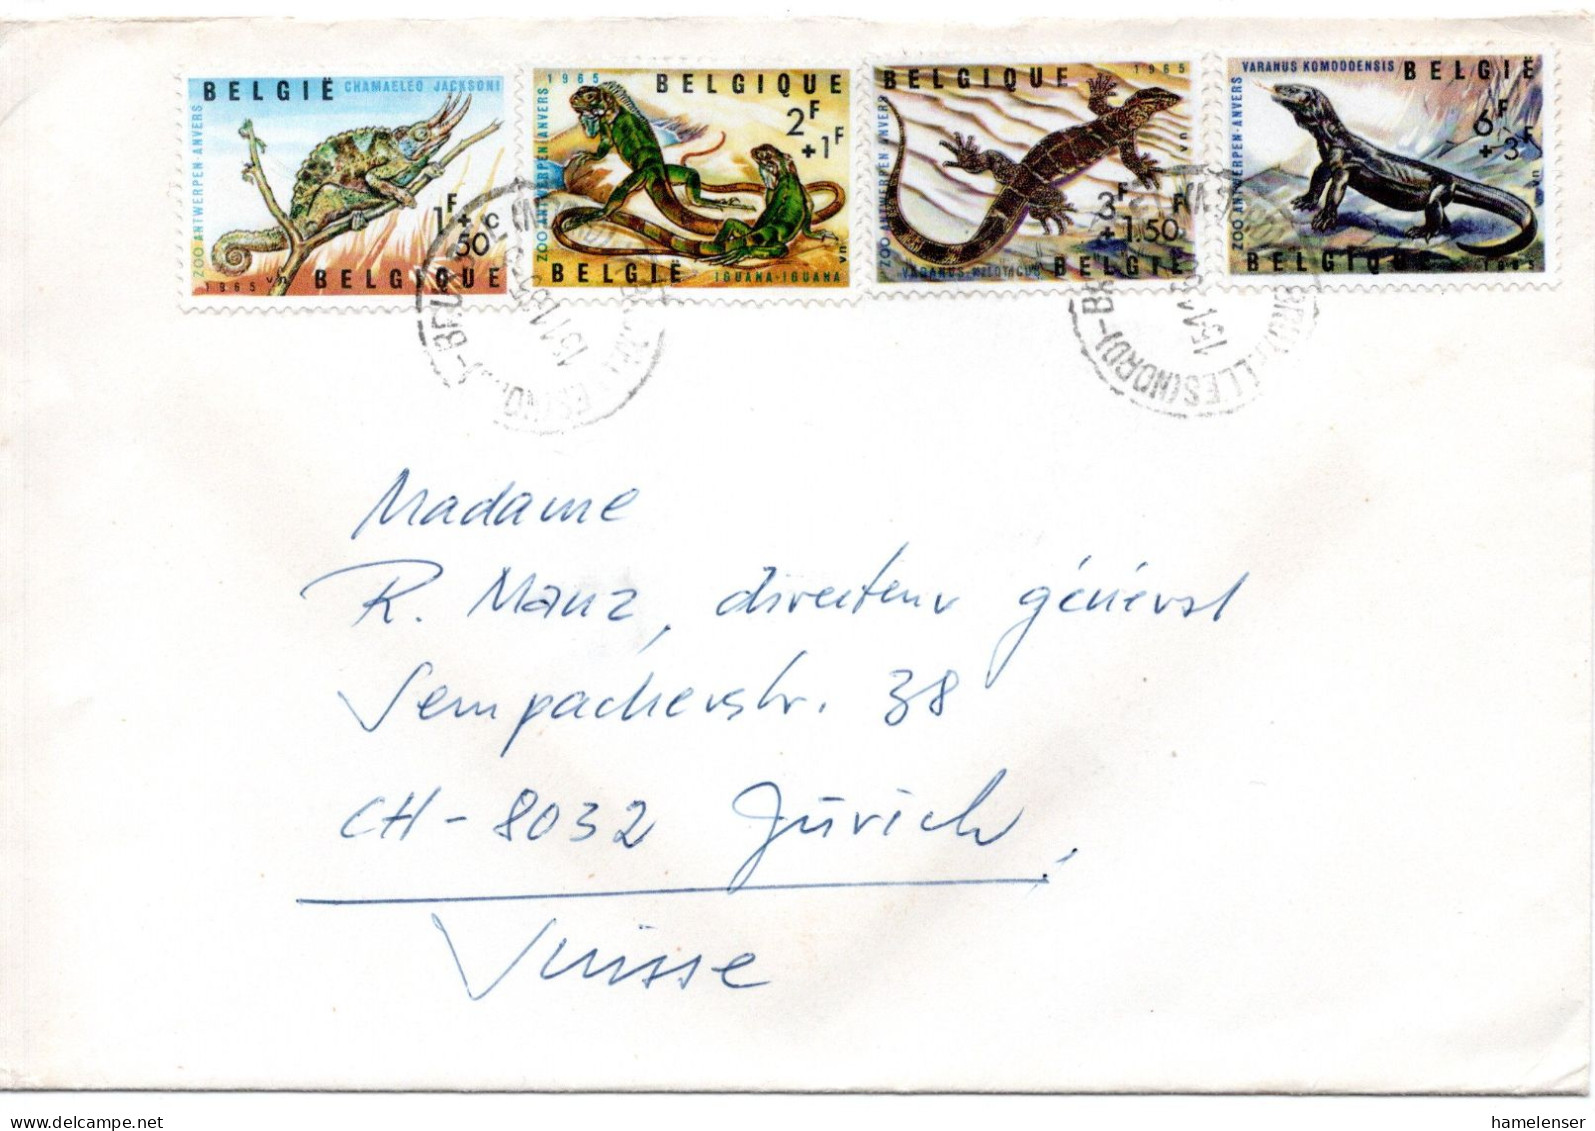 68201 - Belgien - 1965 - 4Wte Zoo Antwerpen MiF A Bf BRUXELLES -> Schweiz - Storia Postale